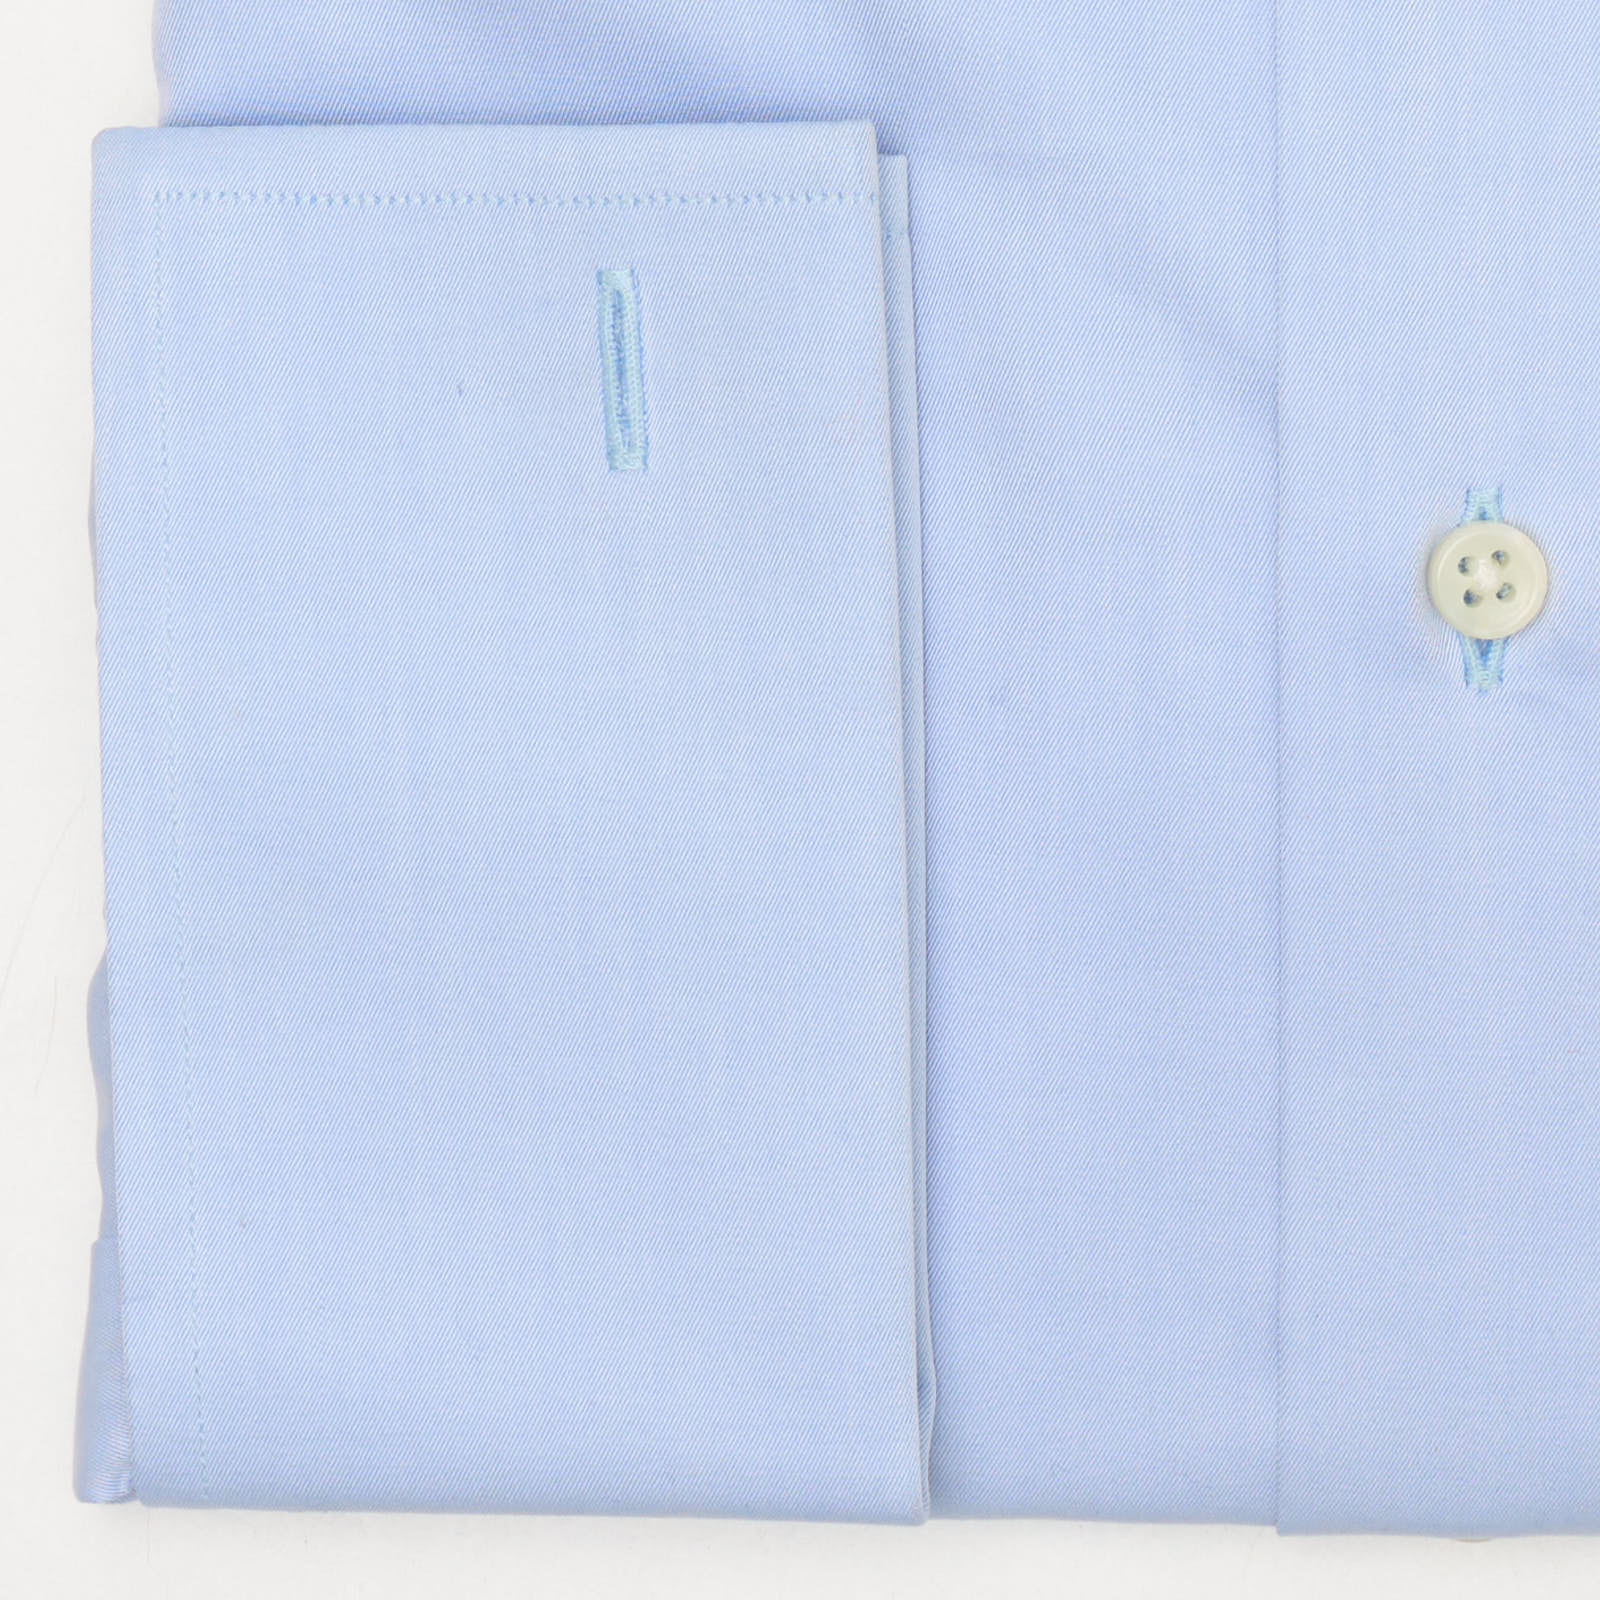 VANNUCCI Milano Light Blue Twill Cotton French Cuff Dress Shirt NEW